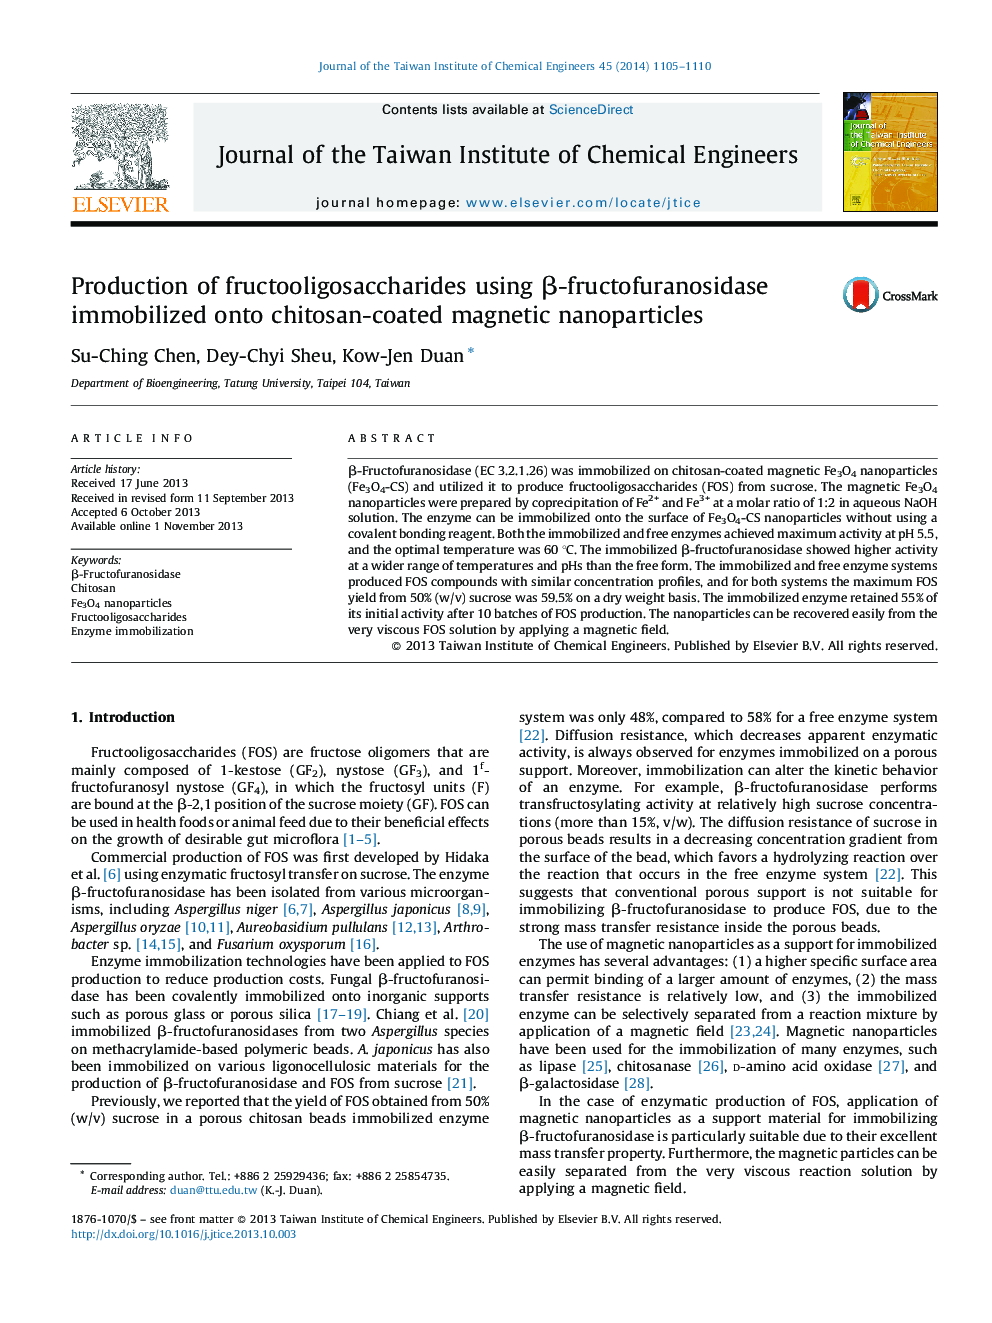 Production of fructooligosaccharides using β-fructofuranosidase immobilized onto chitosan-coated magnetic nanoparticles